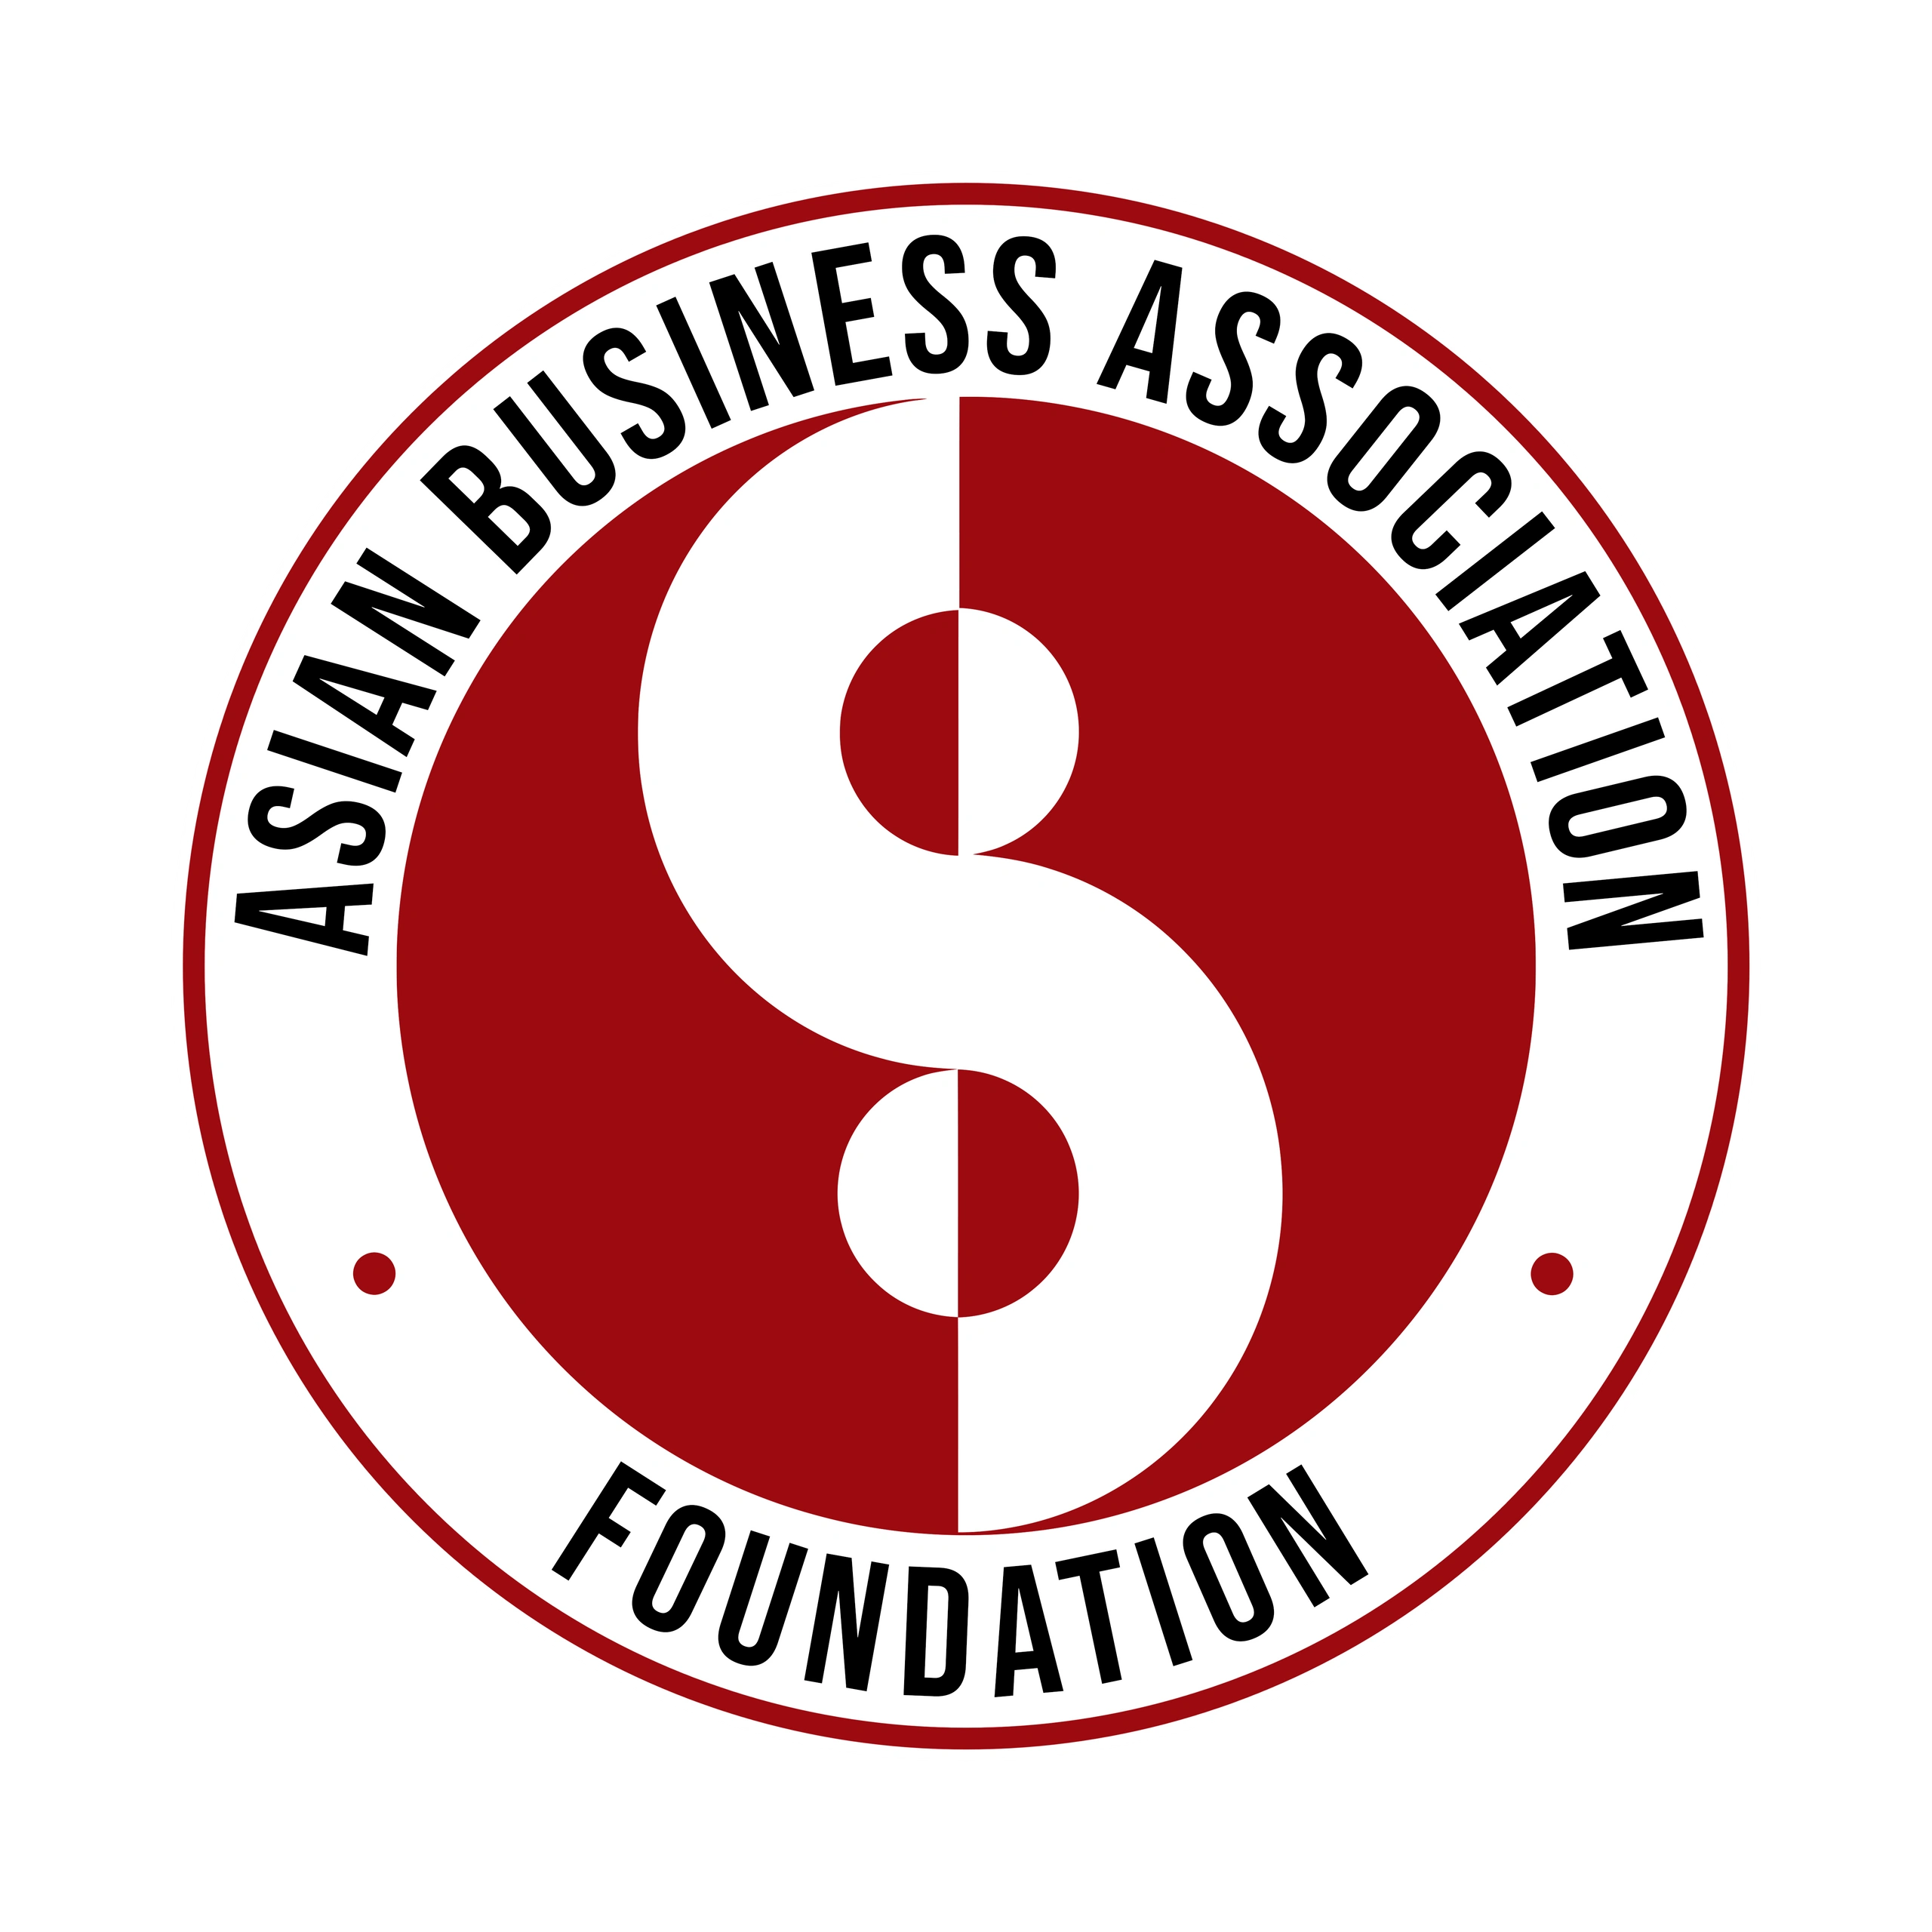 Asian Business Association Foundation